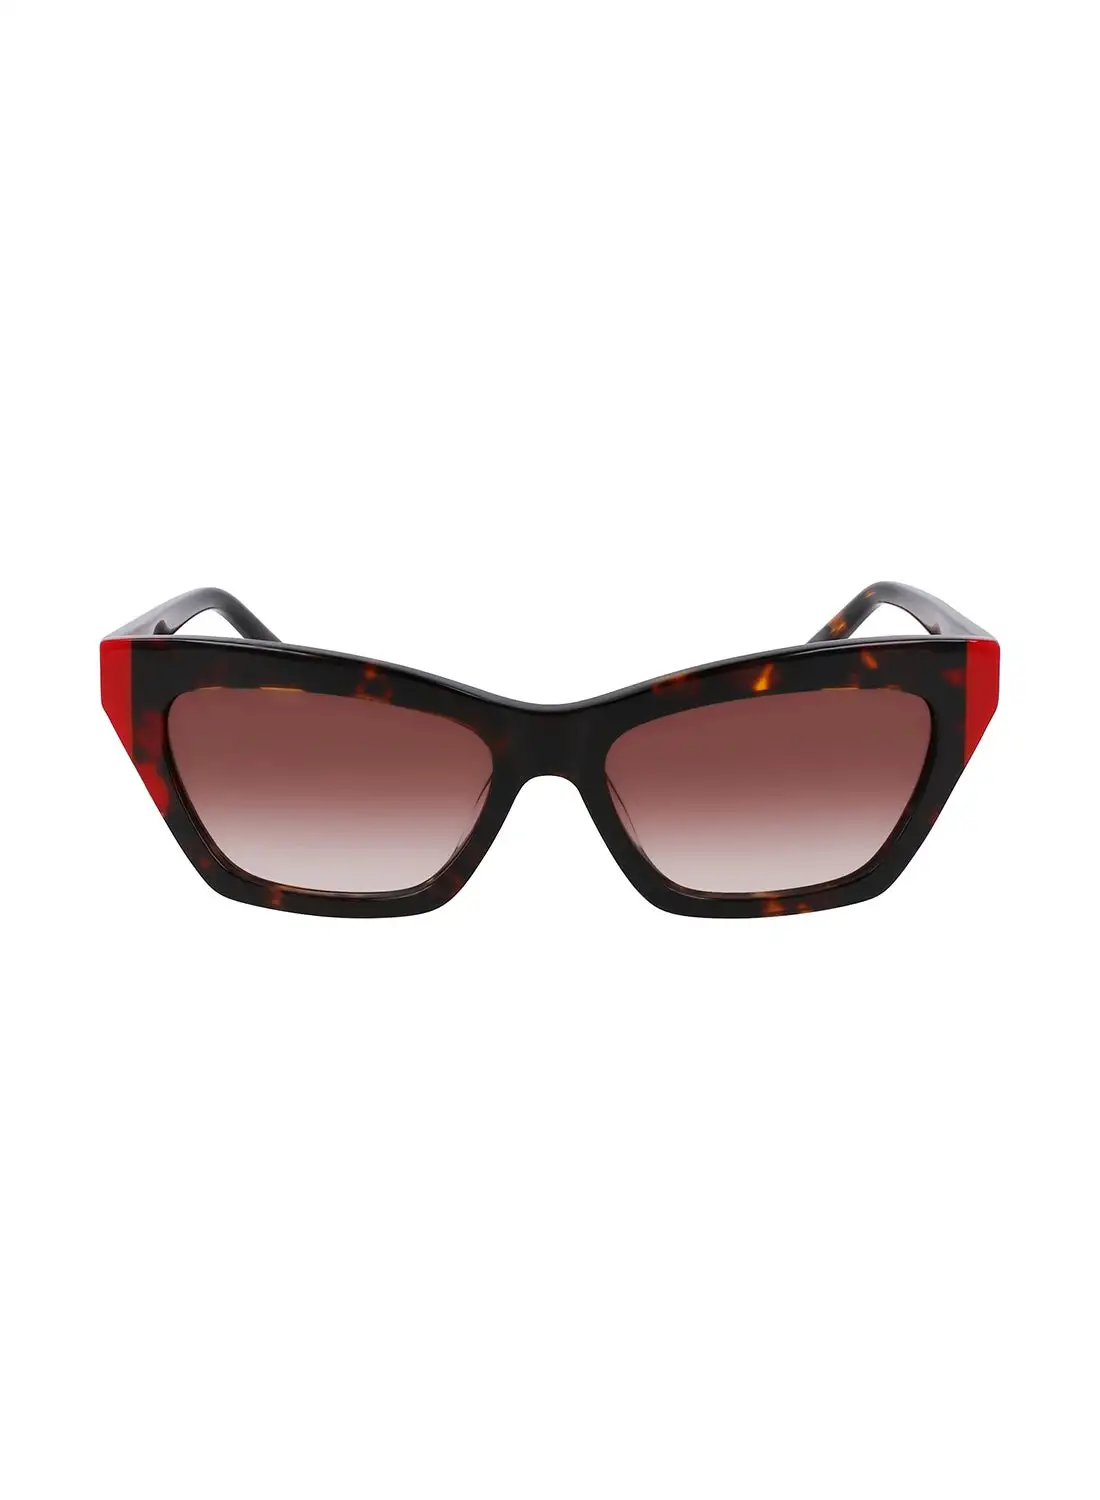 DKNY Women's Cat Eye Sunglasses - DK547S-237-5516 - Lens Size: 55 Mm